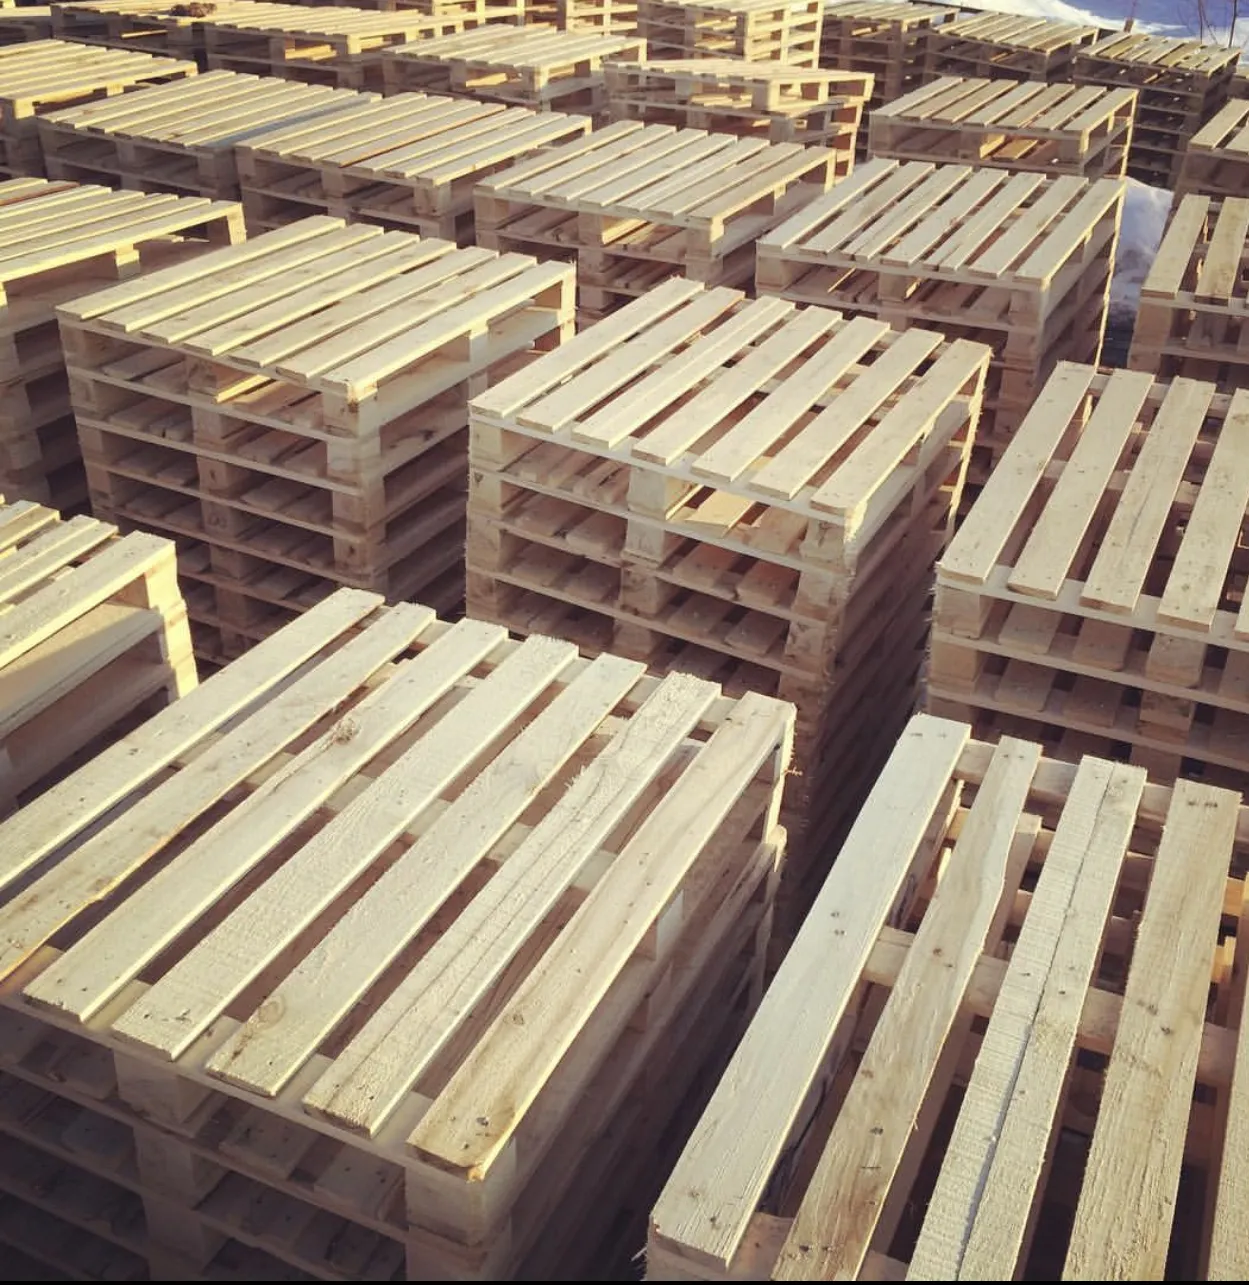 Euro Epal Wooden Pallets wholesale distributors